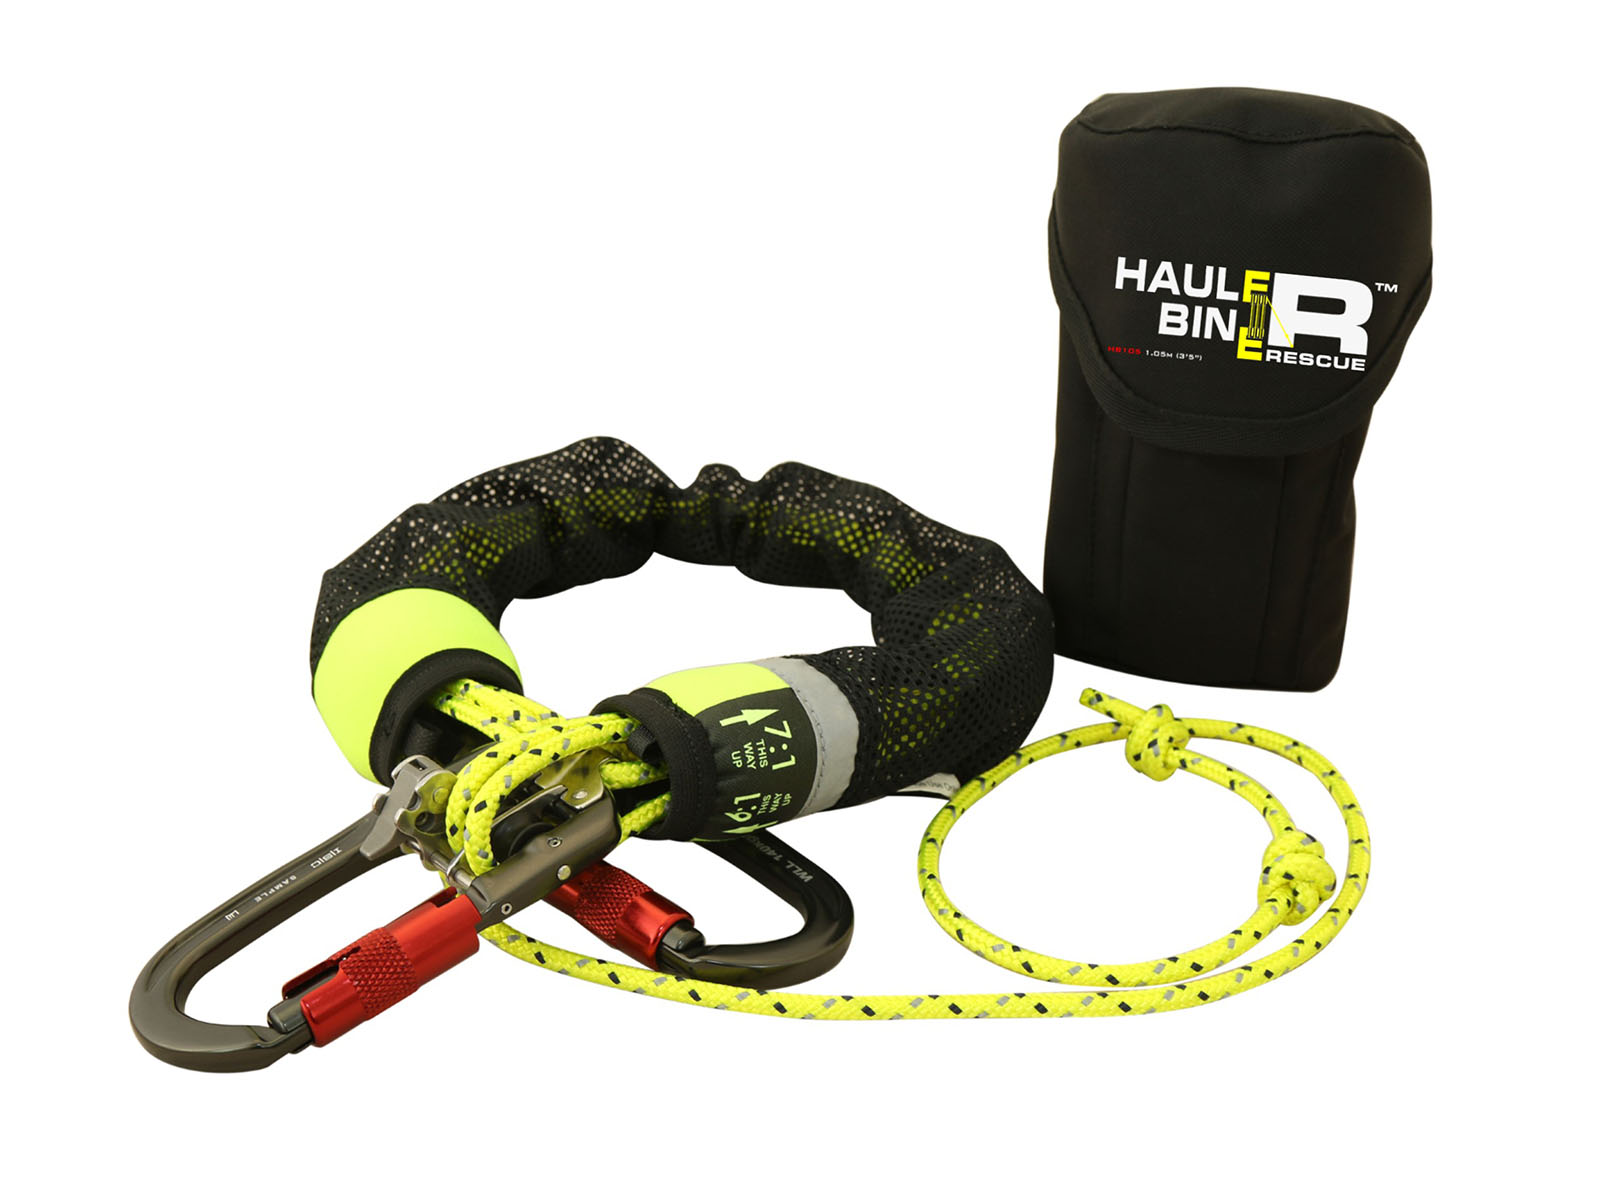 Haulerbiner Compact Rescue Kit